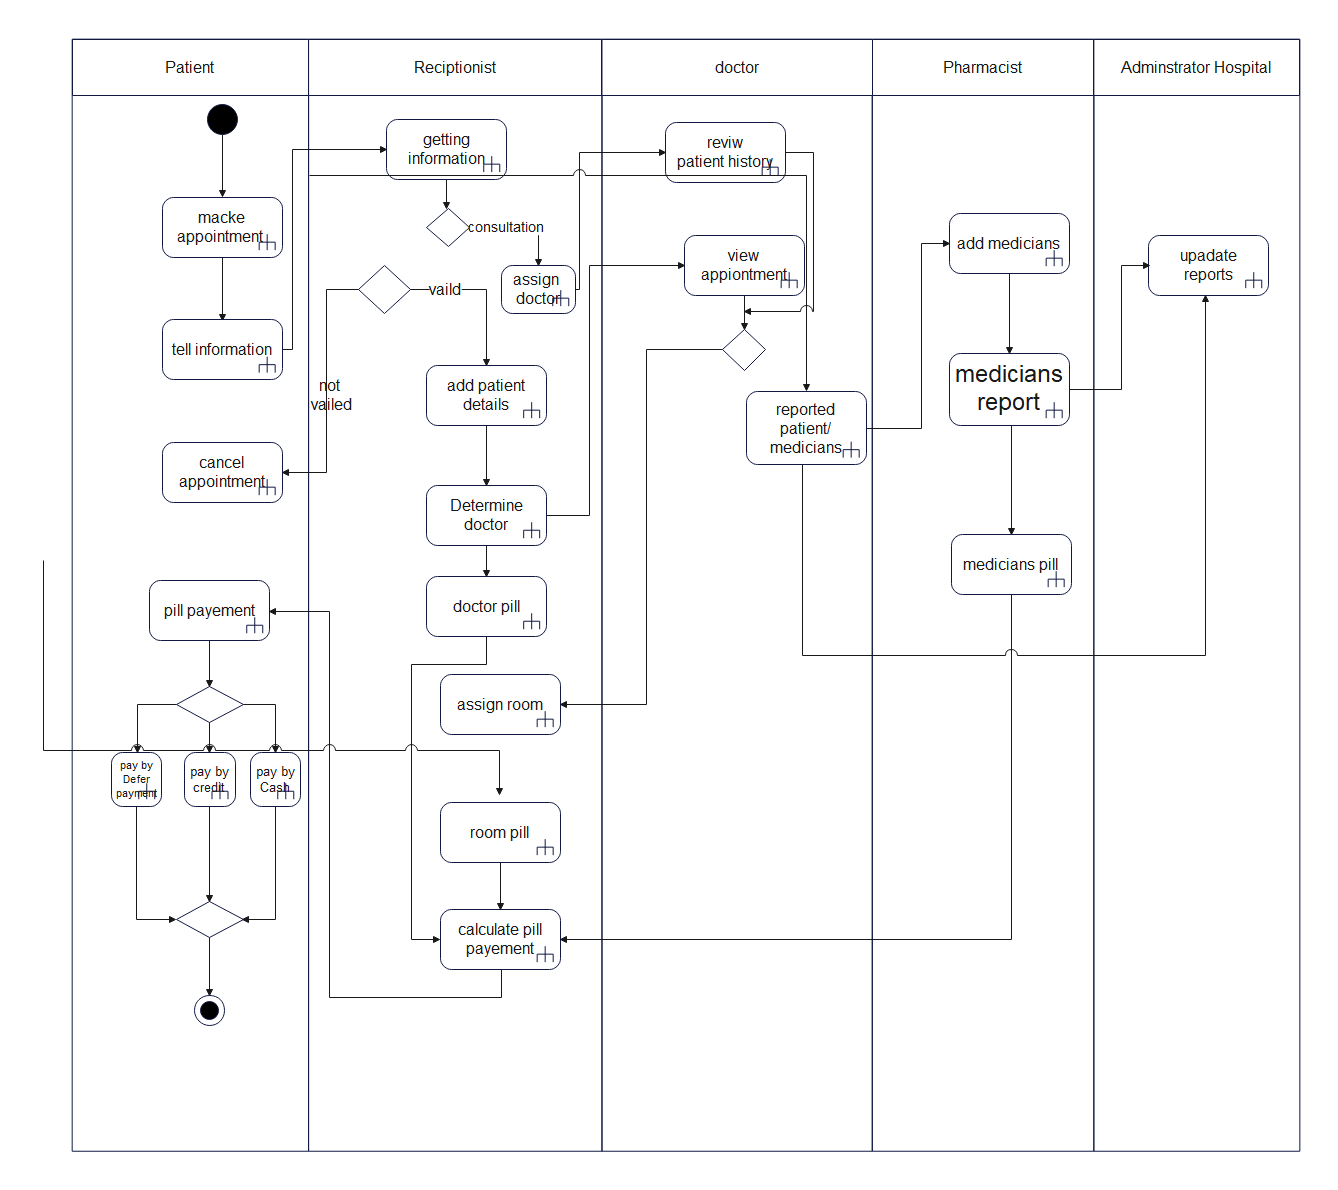 Hospital Management System UML Diagram